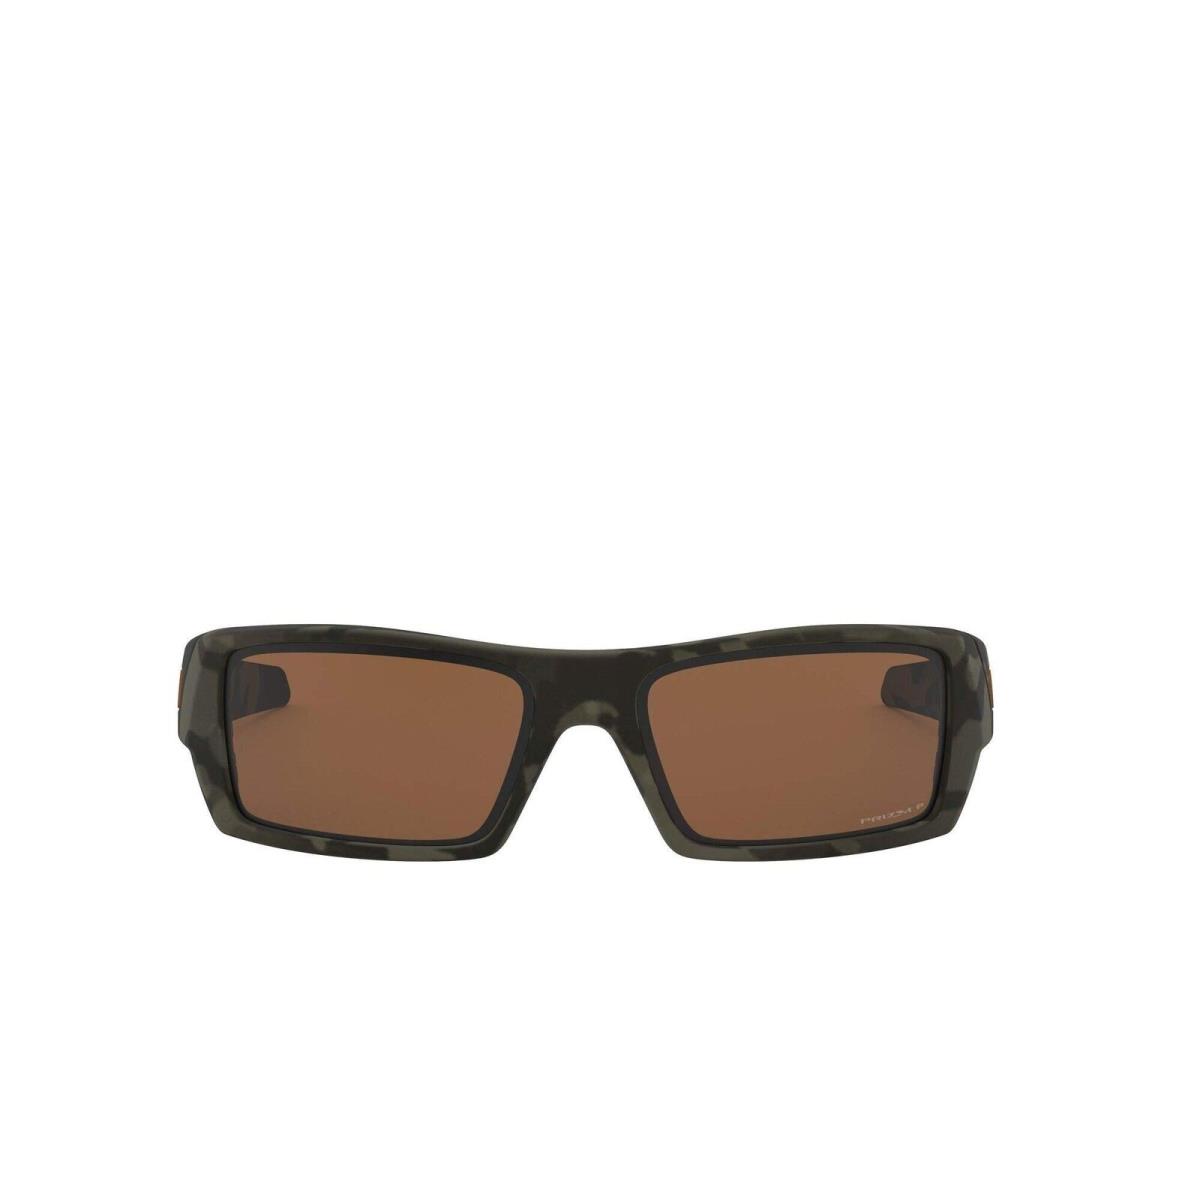 OO9014-51 Mens Oakley Gascan Polarized Sunglasses - Frame: Green